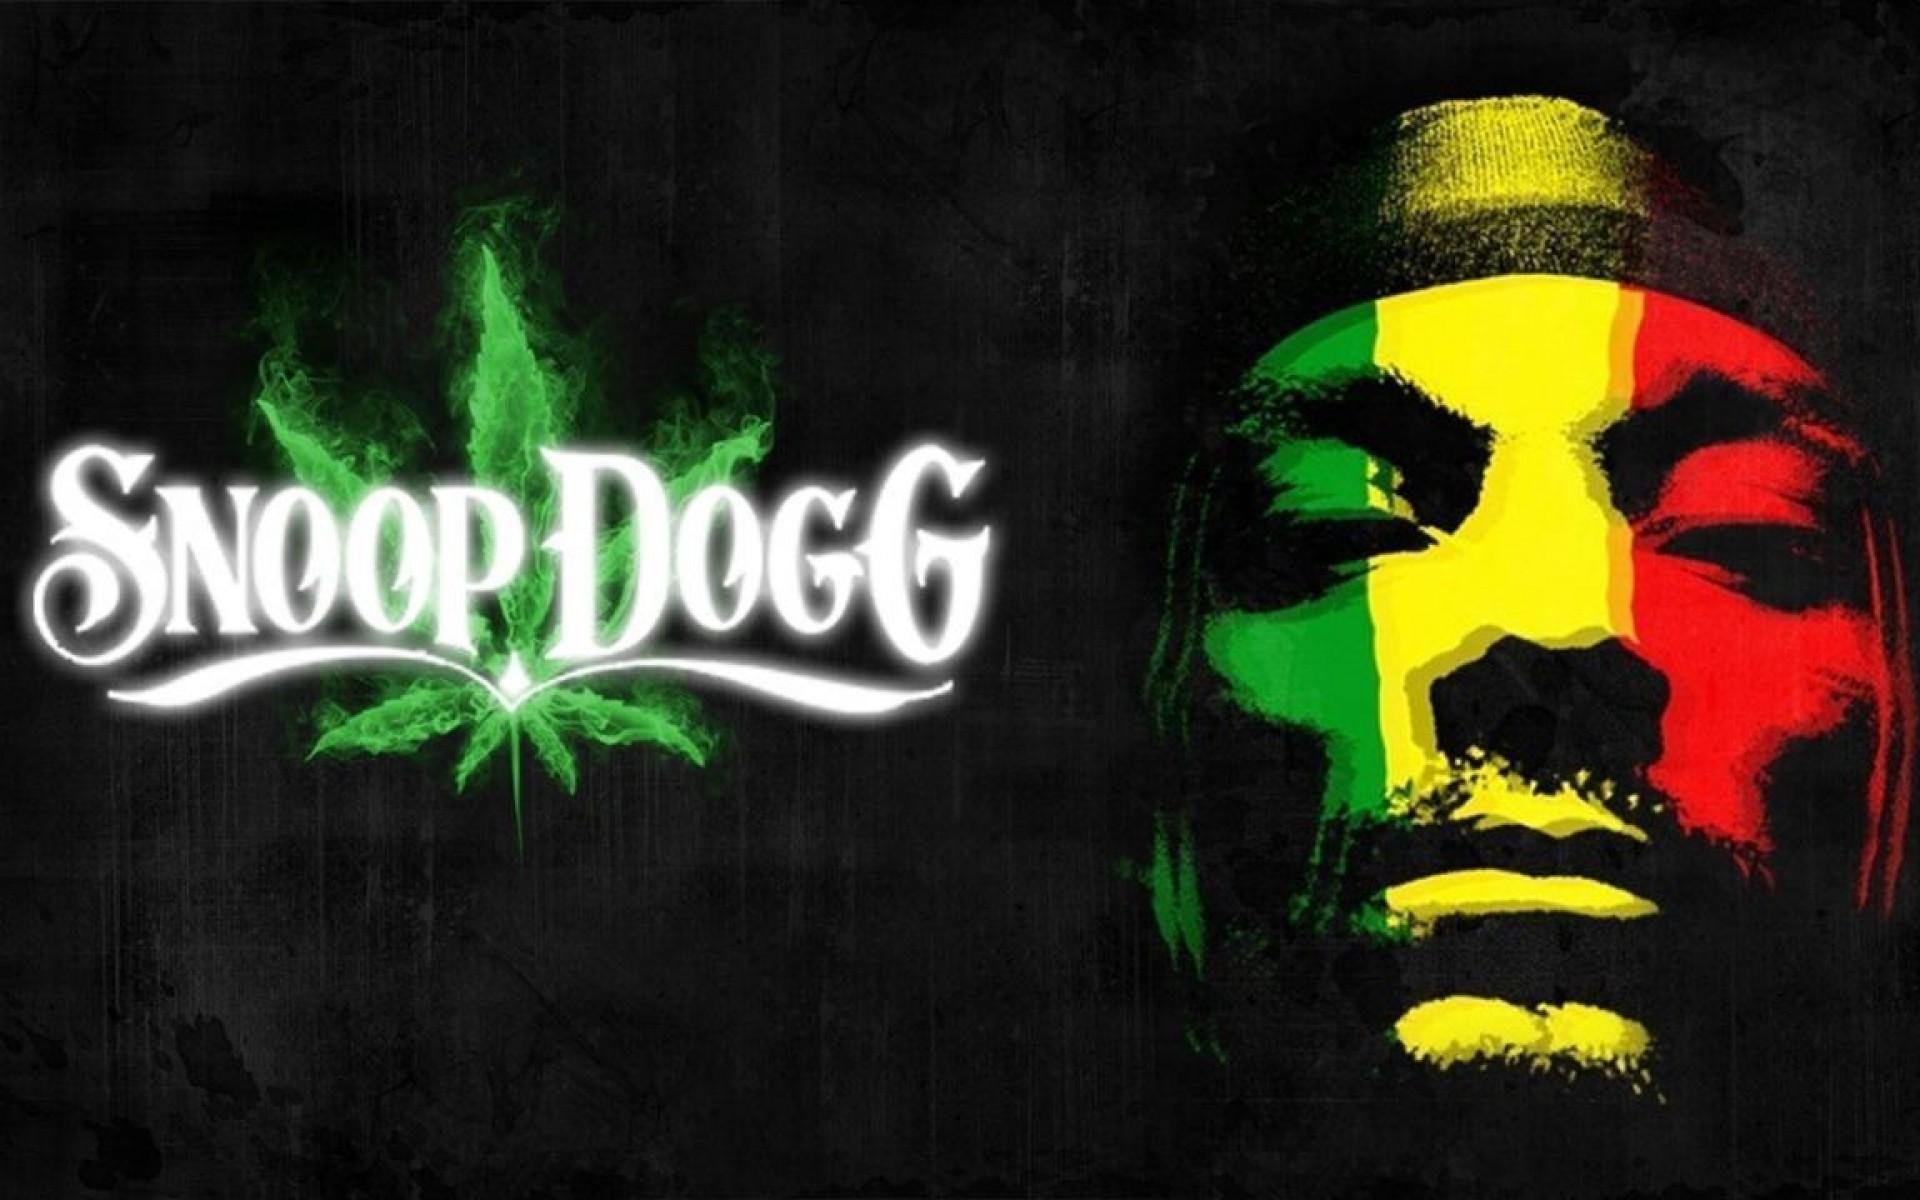 Free Download Fantastic Background, 27 Snoop Dogg 100